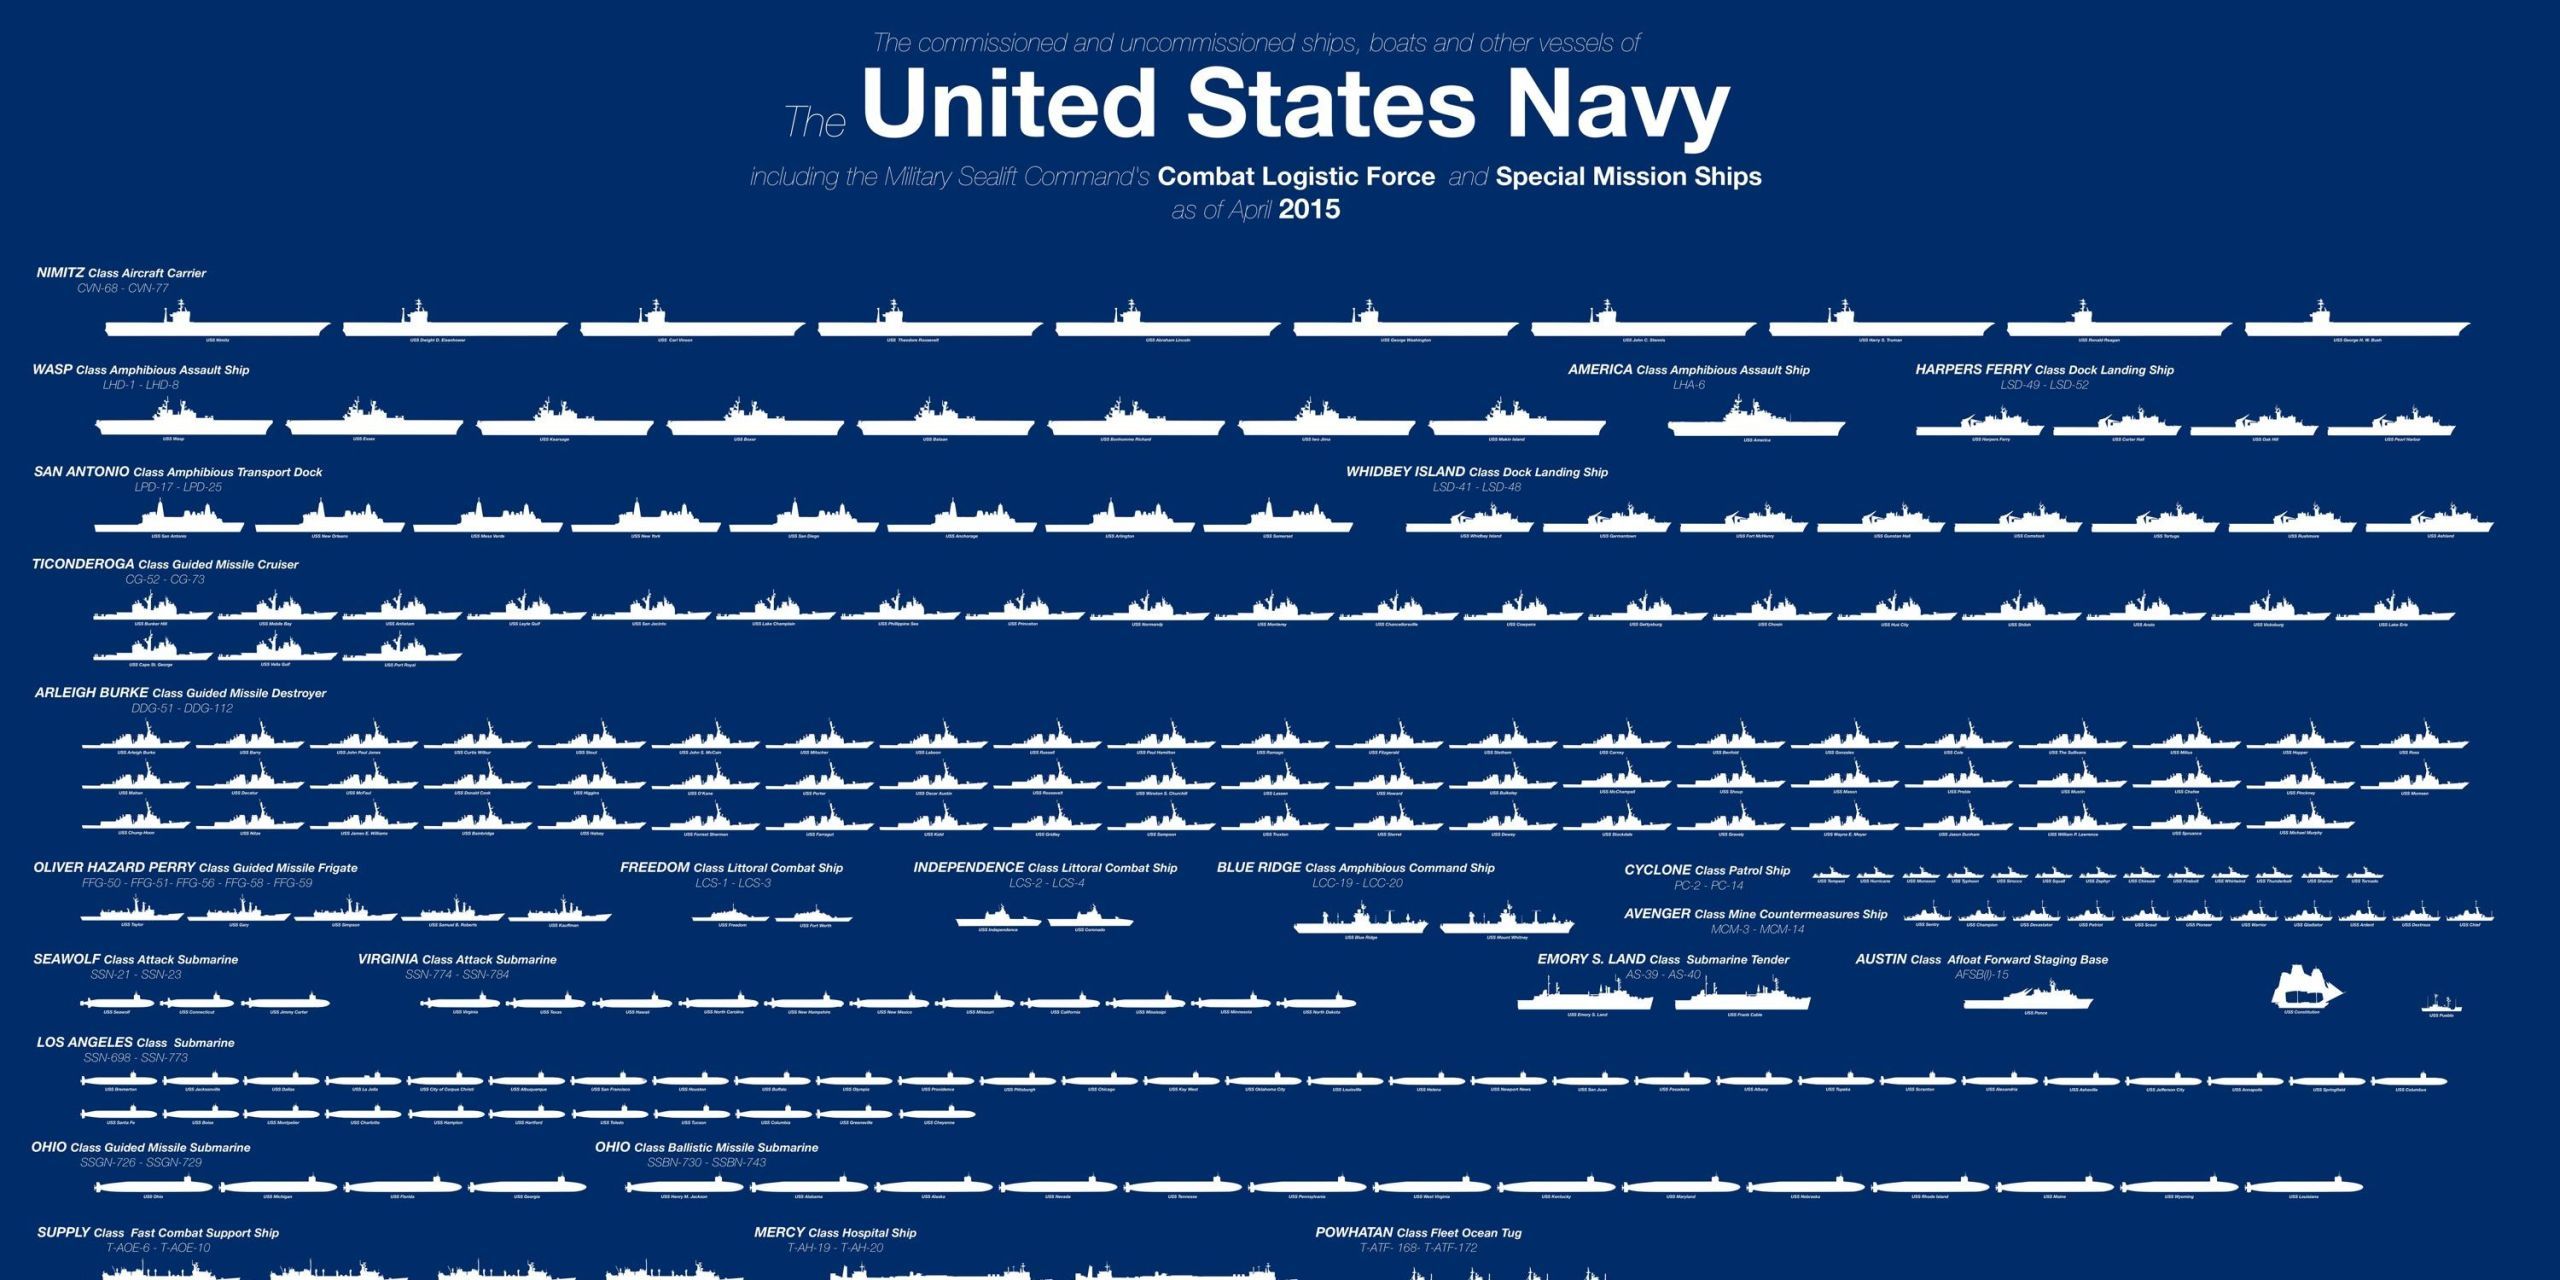 Us Navy Organization Chart